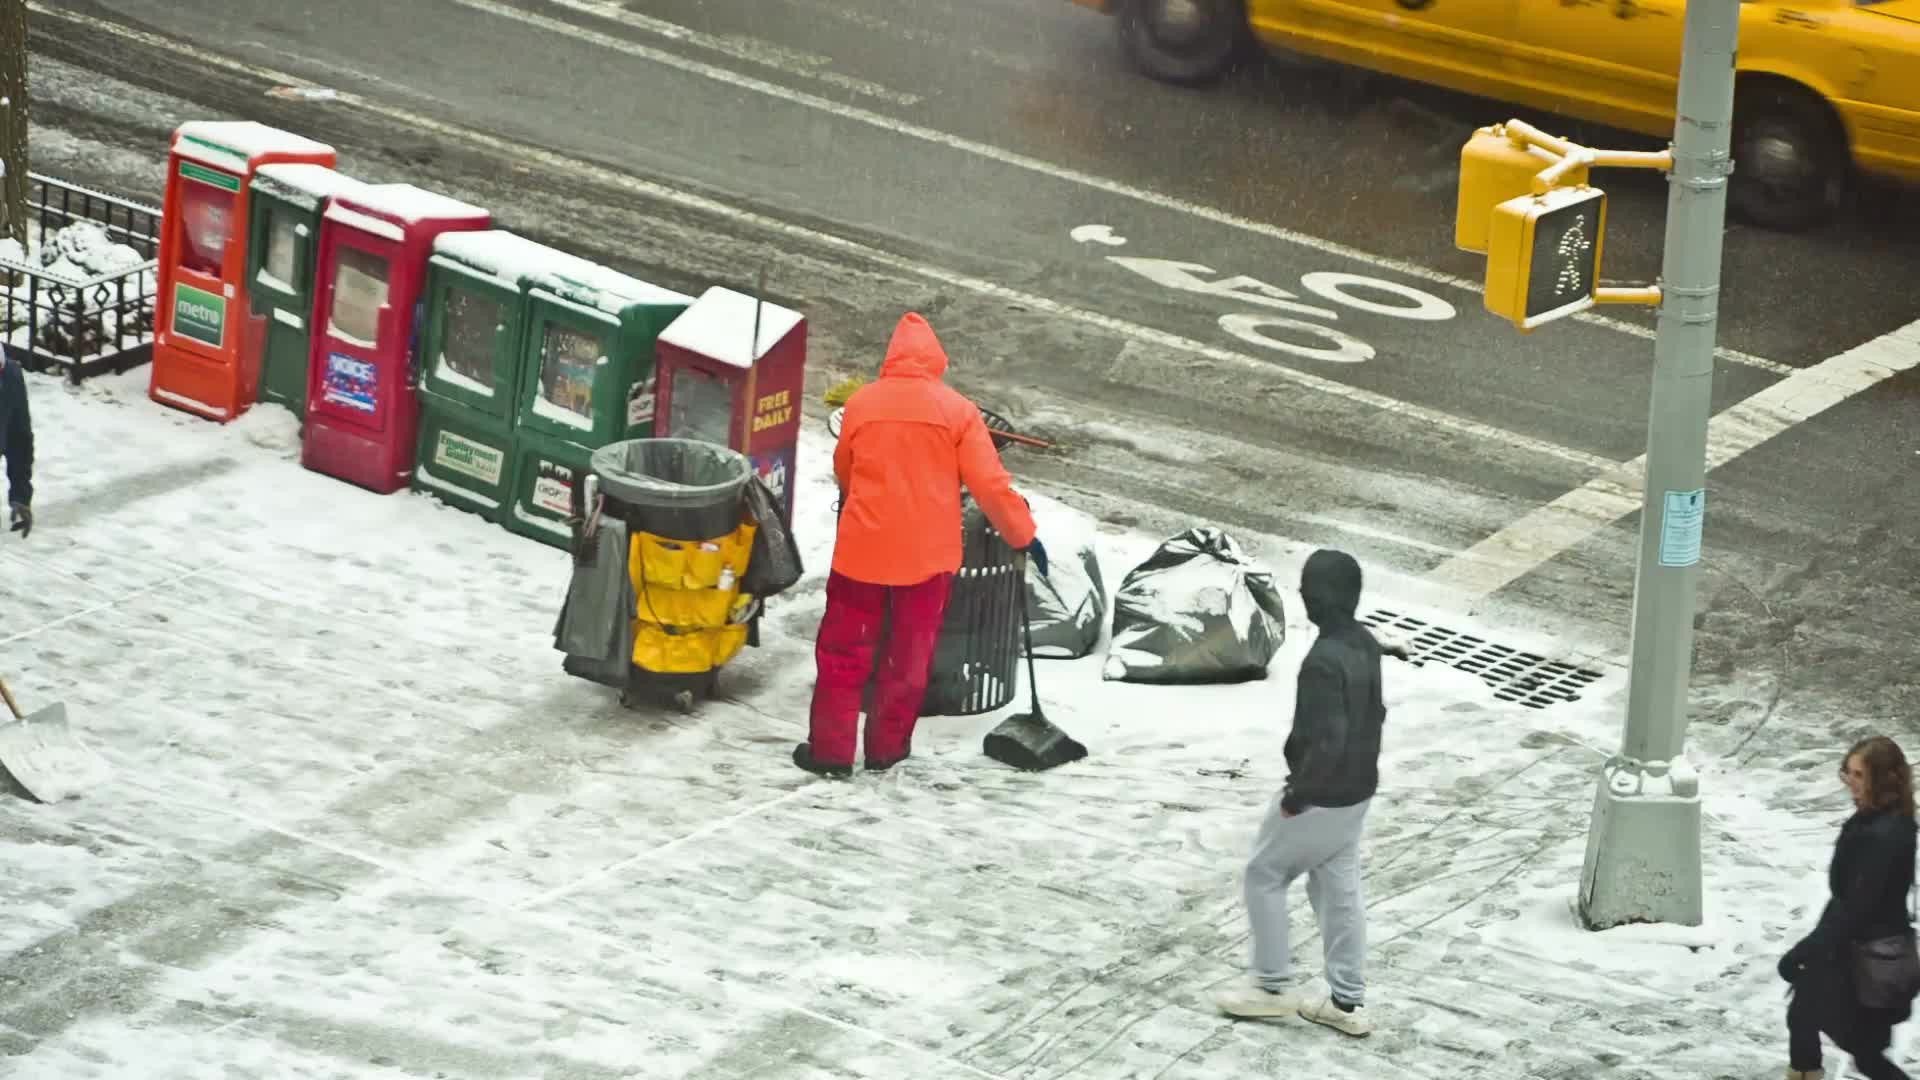 sanitation man in orange jacket shoveling snow on corner in blizzard on winter day snowing in Manhattan NYC